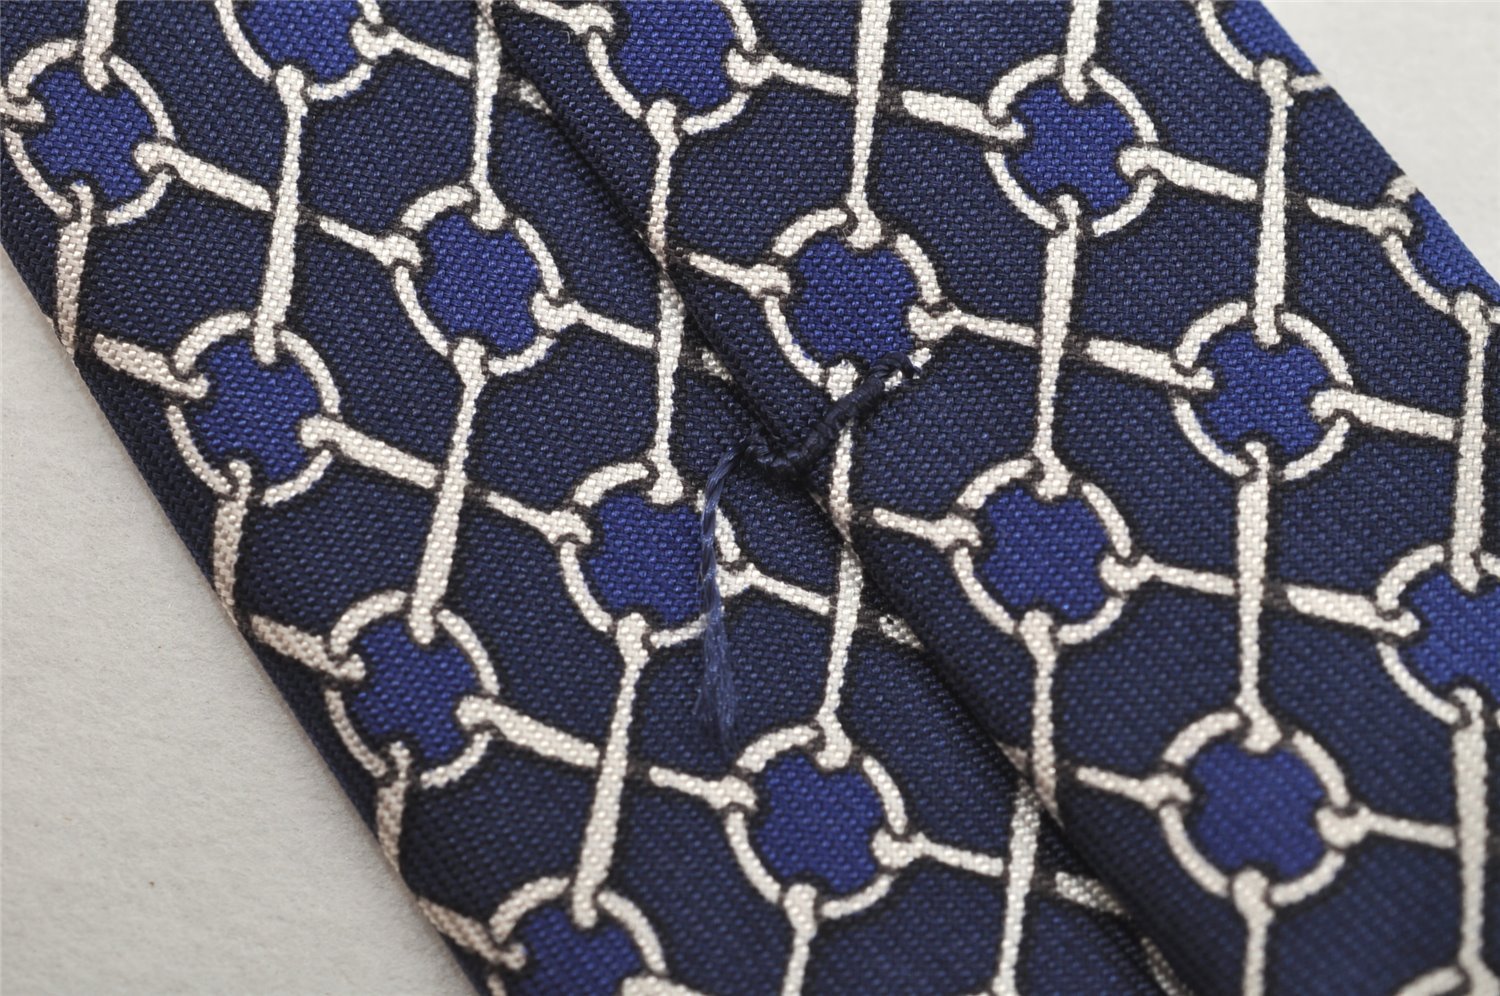 Authentic HERMES Vintage Tie Necktie Chain Pattern Silk 990SA Navy Blue 1399I